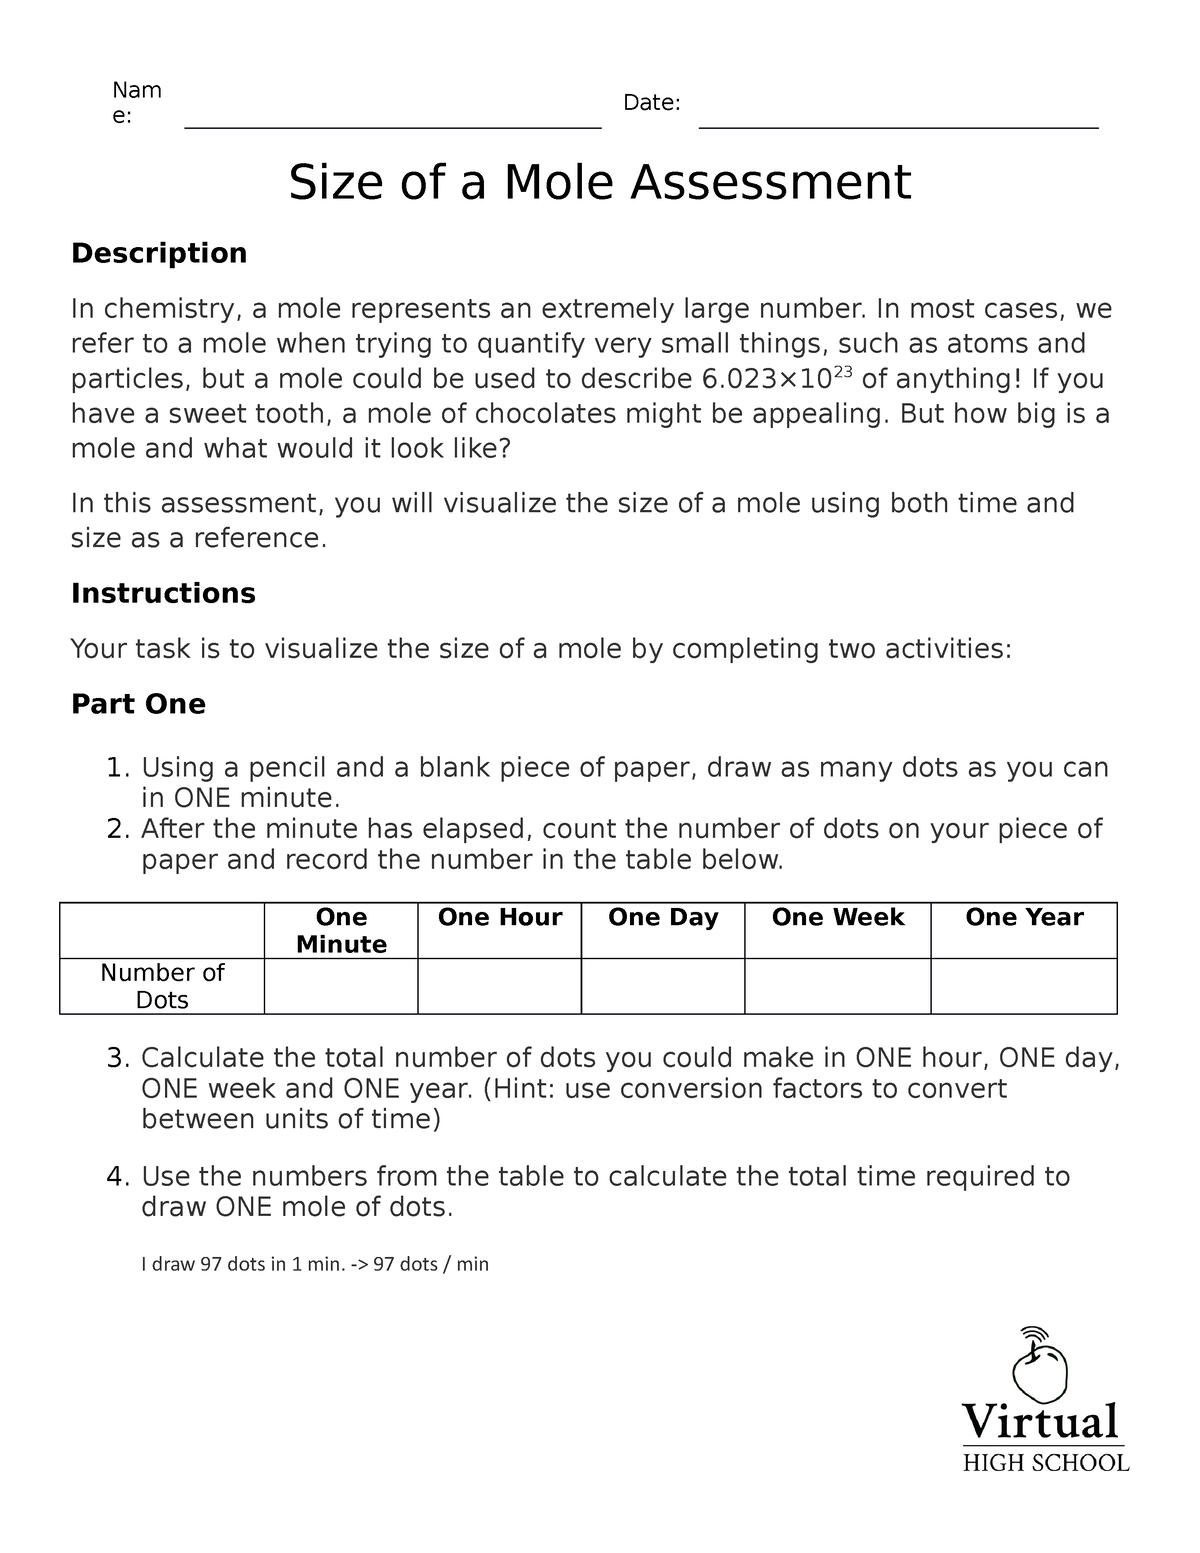 size-of-a-mole-worksheet-e-date-size-of-a-mole-assessment-description-in-chemistry-a-mole